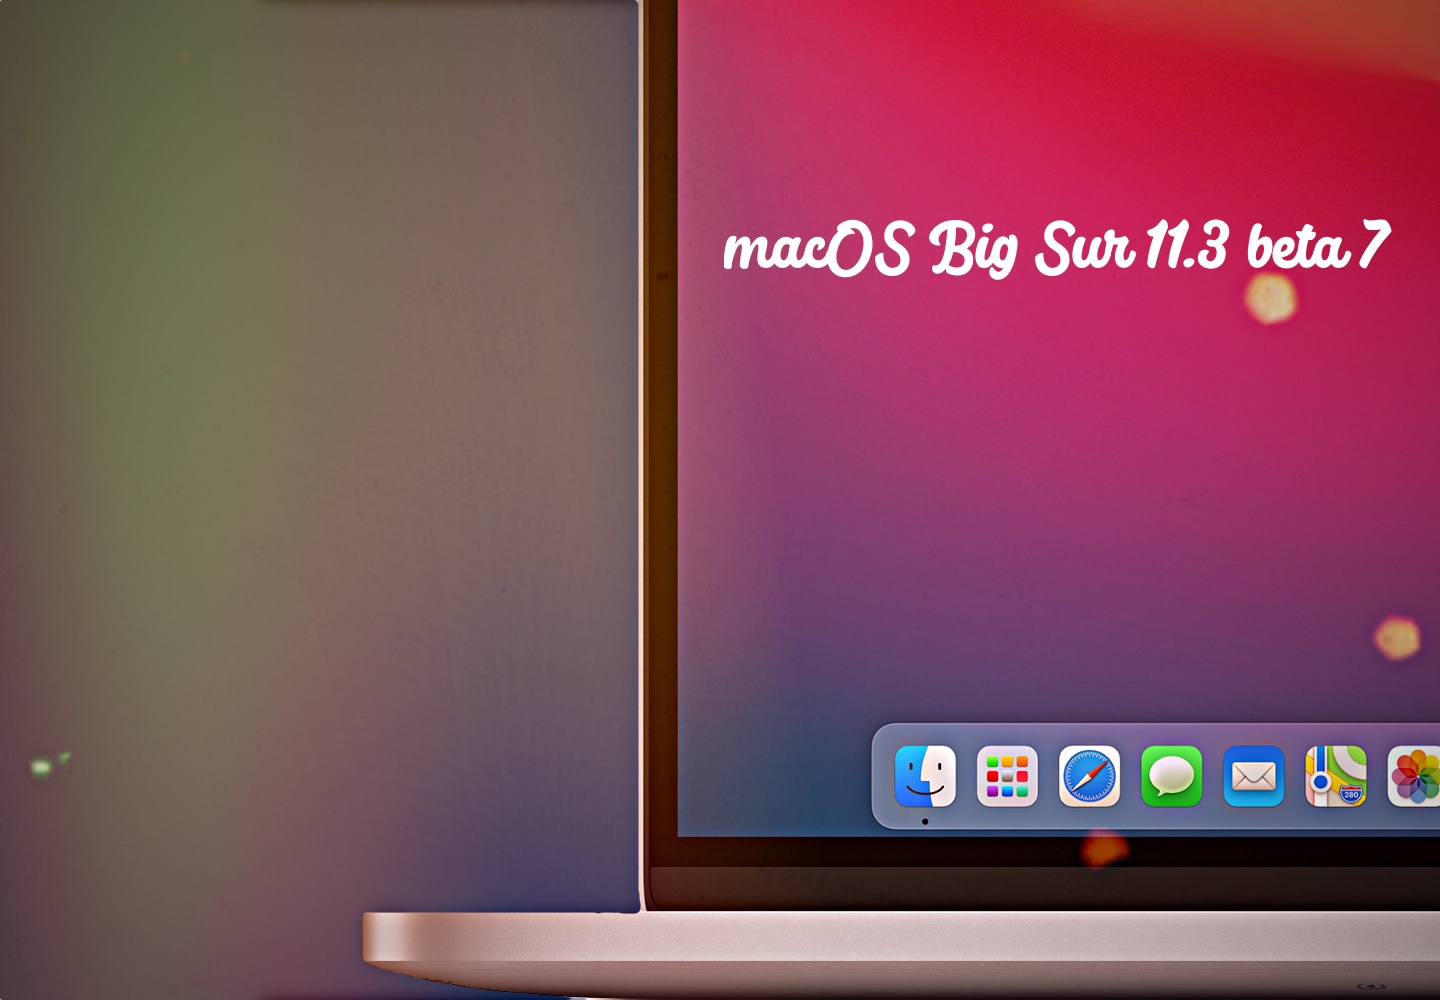 How to download macOS Big Sur Public beta 7 on Mac